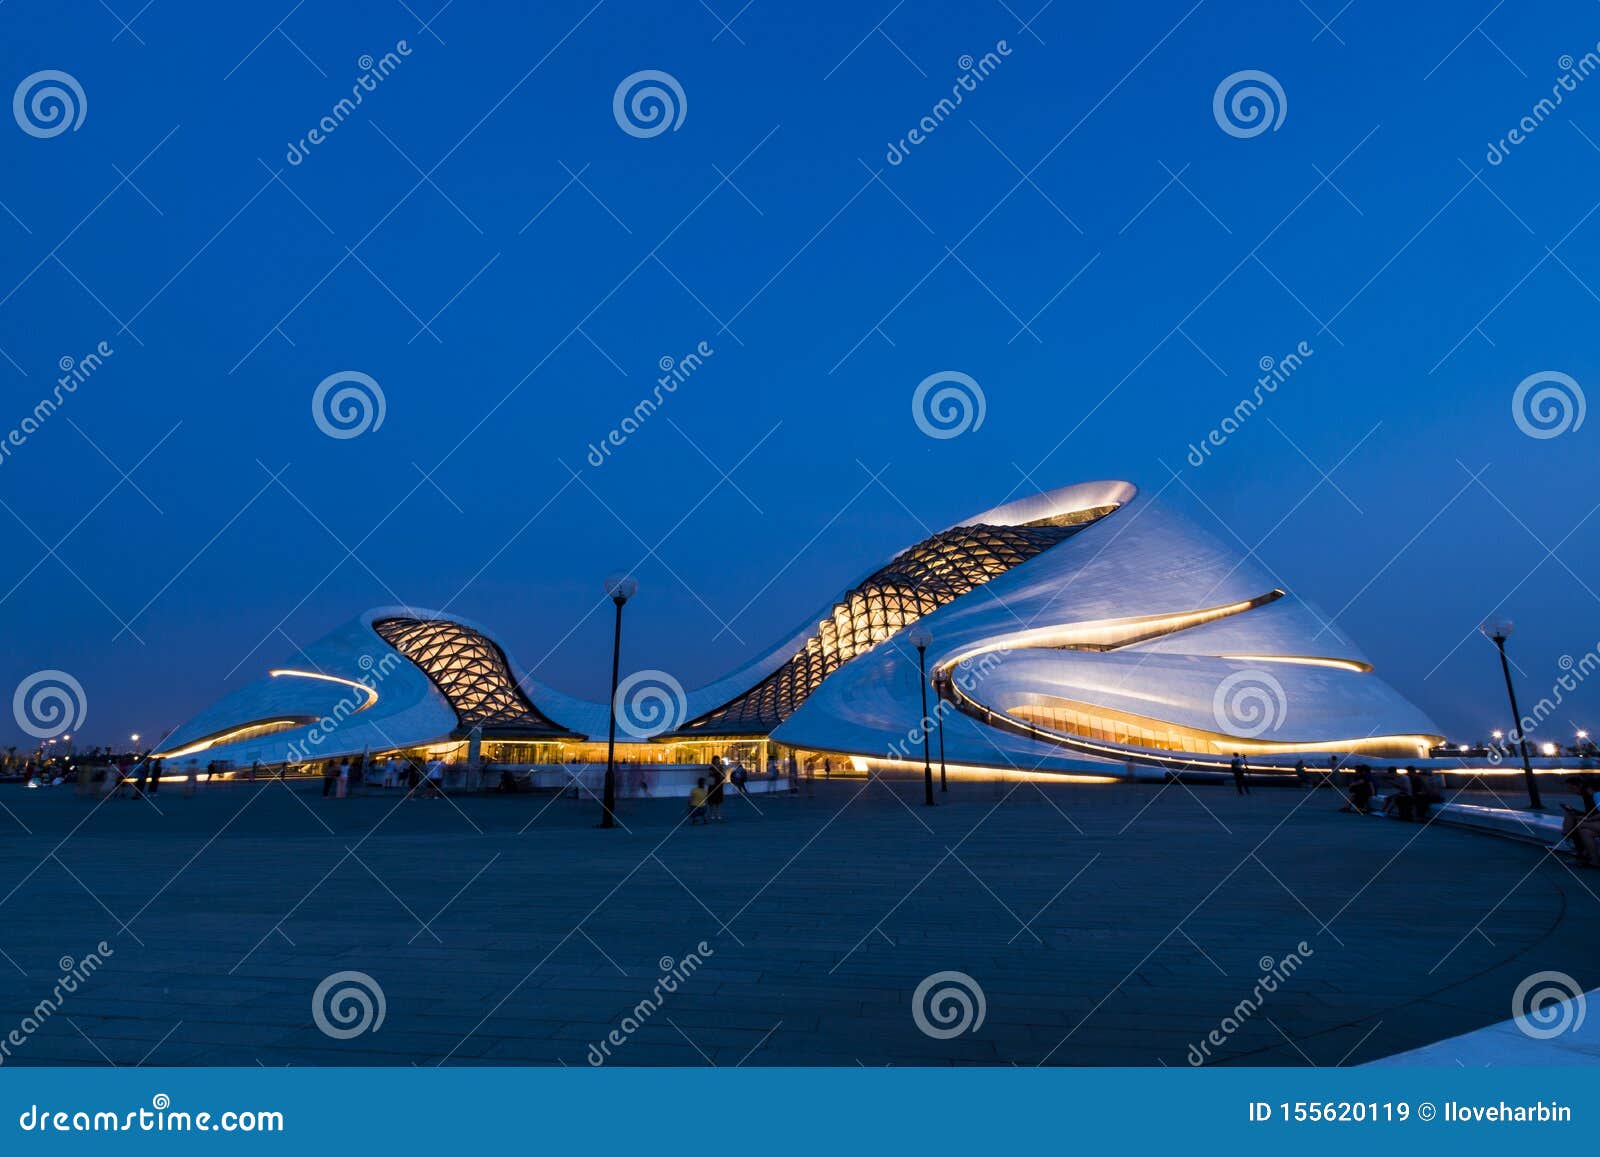 Harbin Opera House editorial stock image. Image of work - 155620119